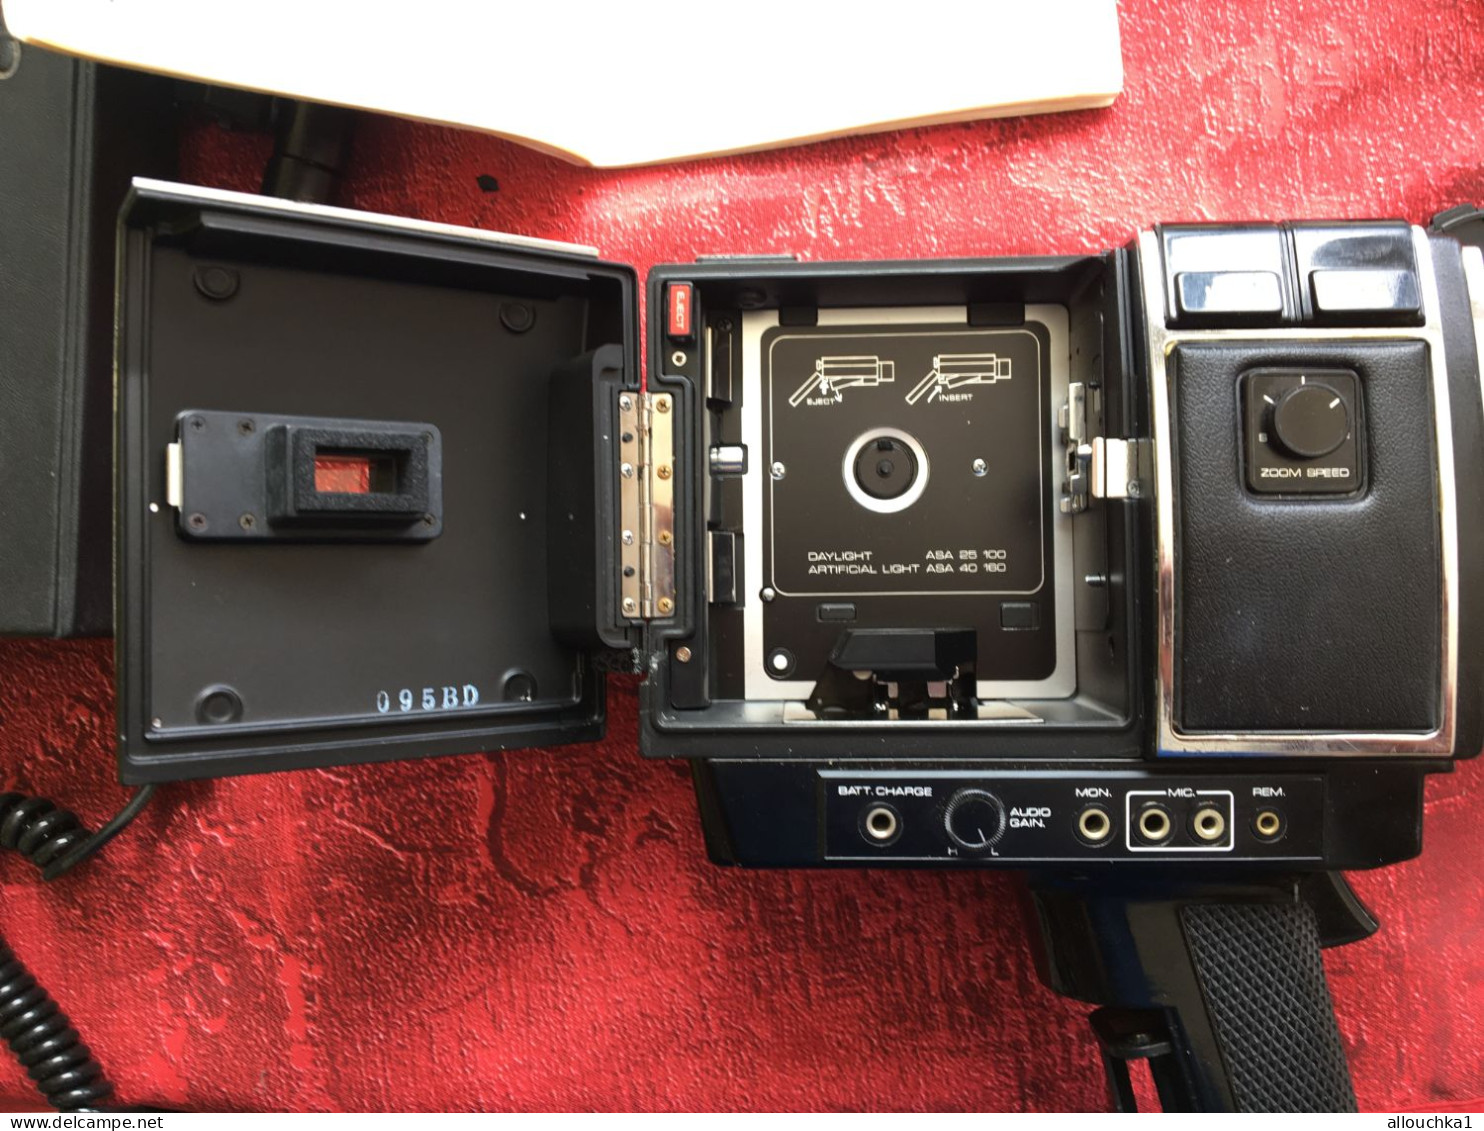 État de fonctionnement Appareil photo Camera Chinon 805 S Direct Sound Super 8 Movie Camera, 1975's + sacoche + 2 micros